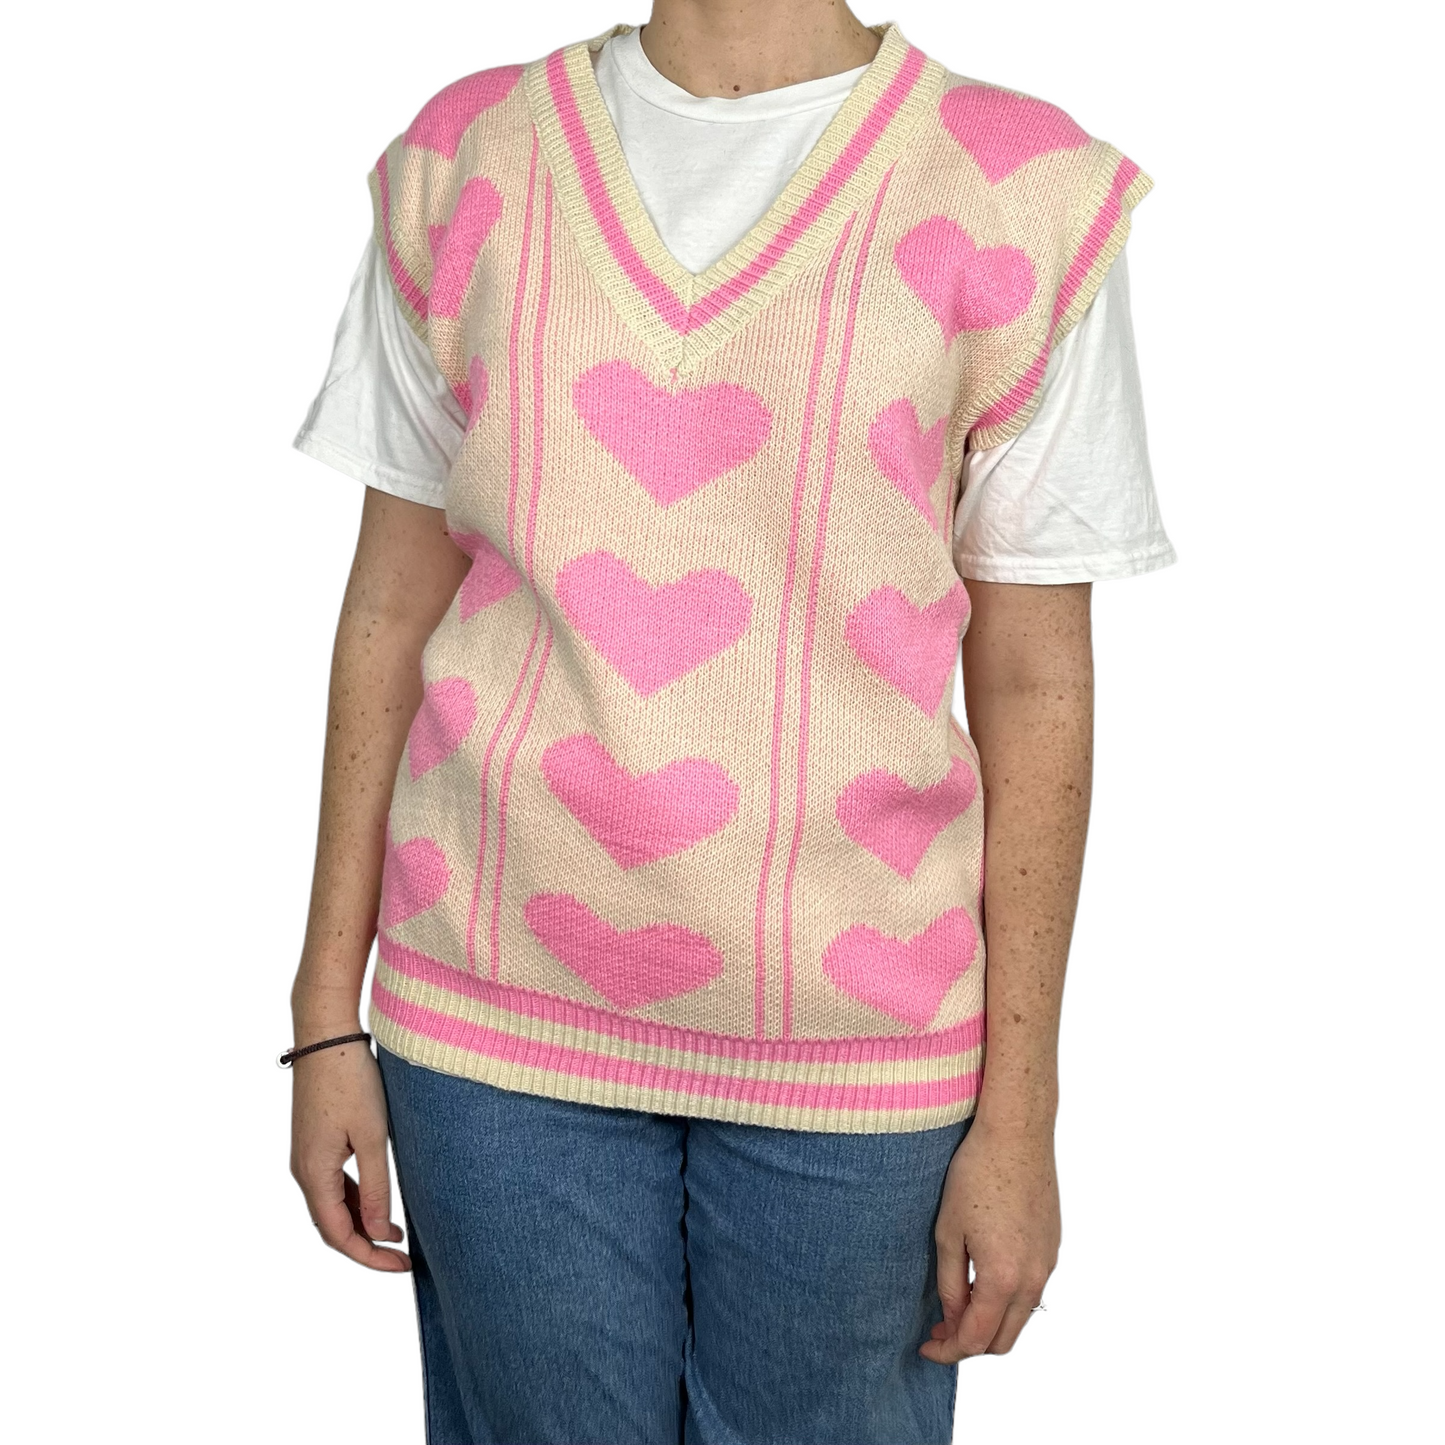 Vintage Hanmade Heart Sweater Vest - Large